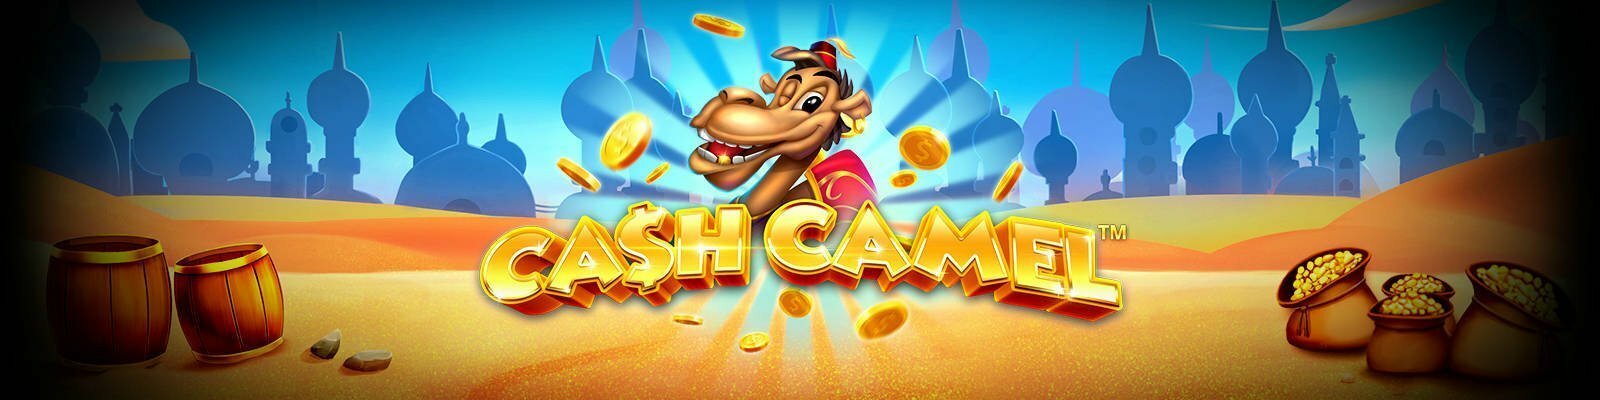 Cash Camel logo